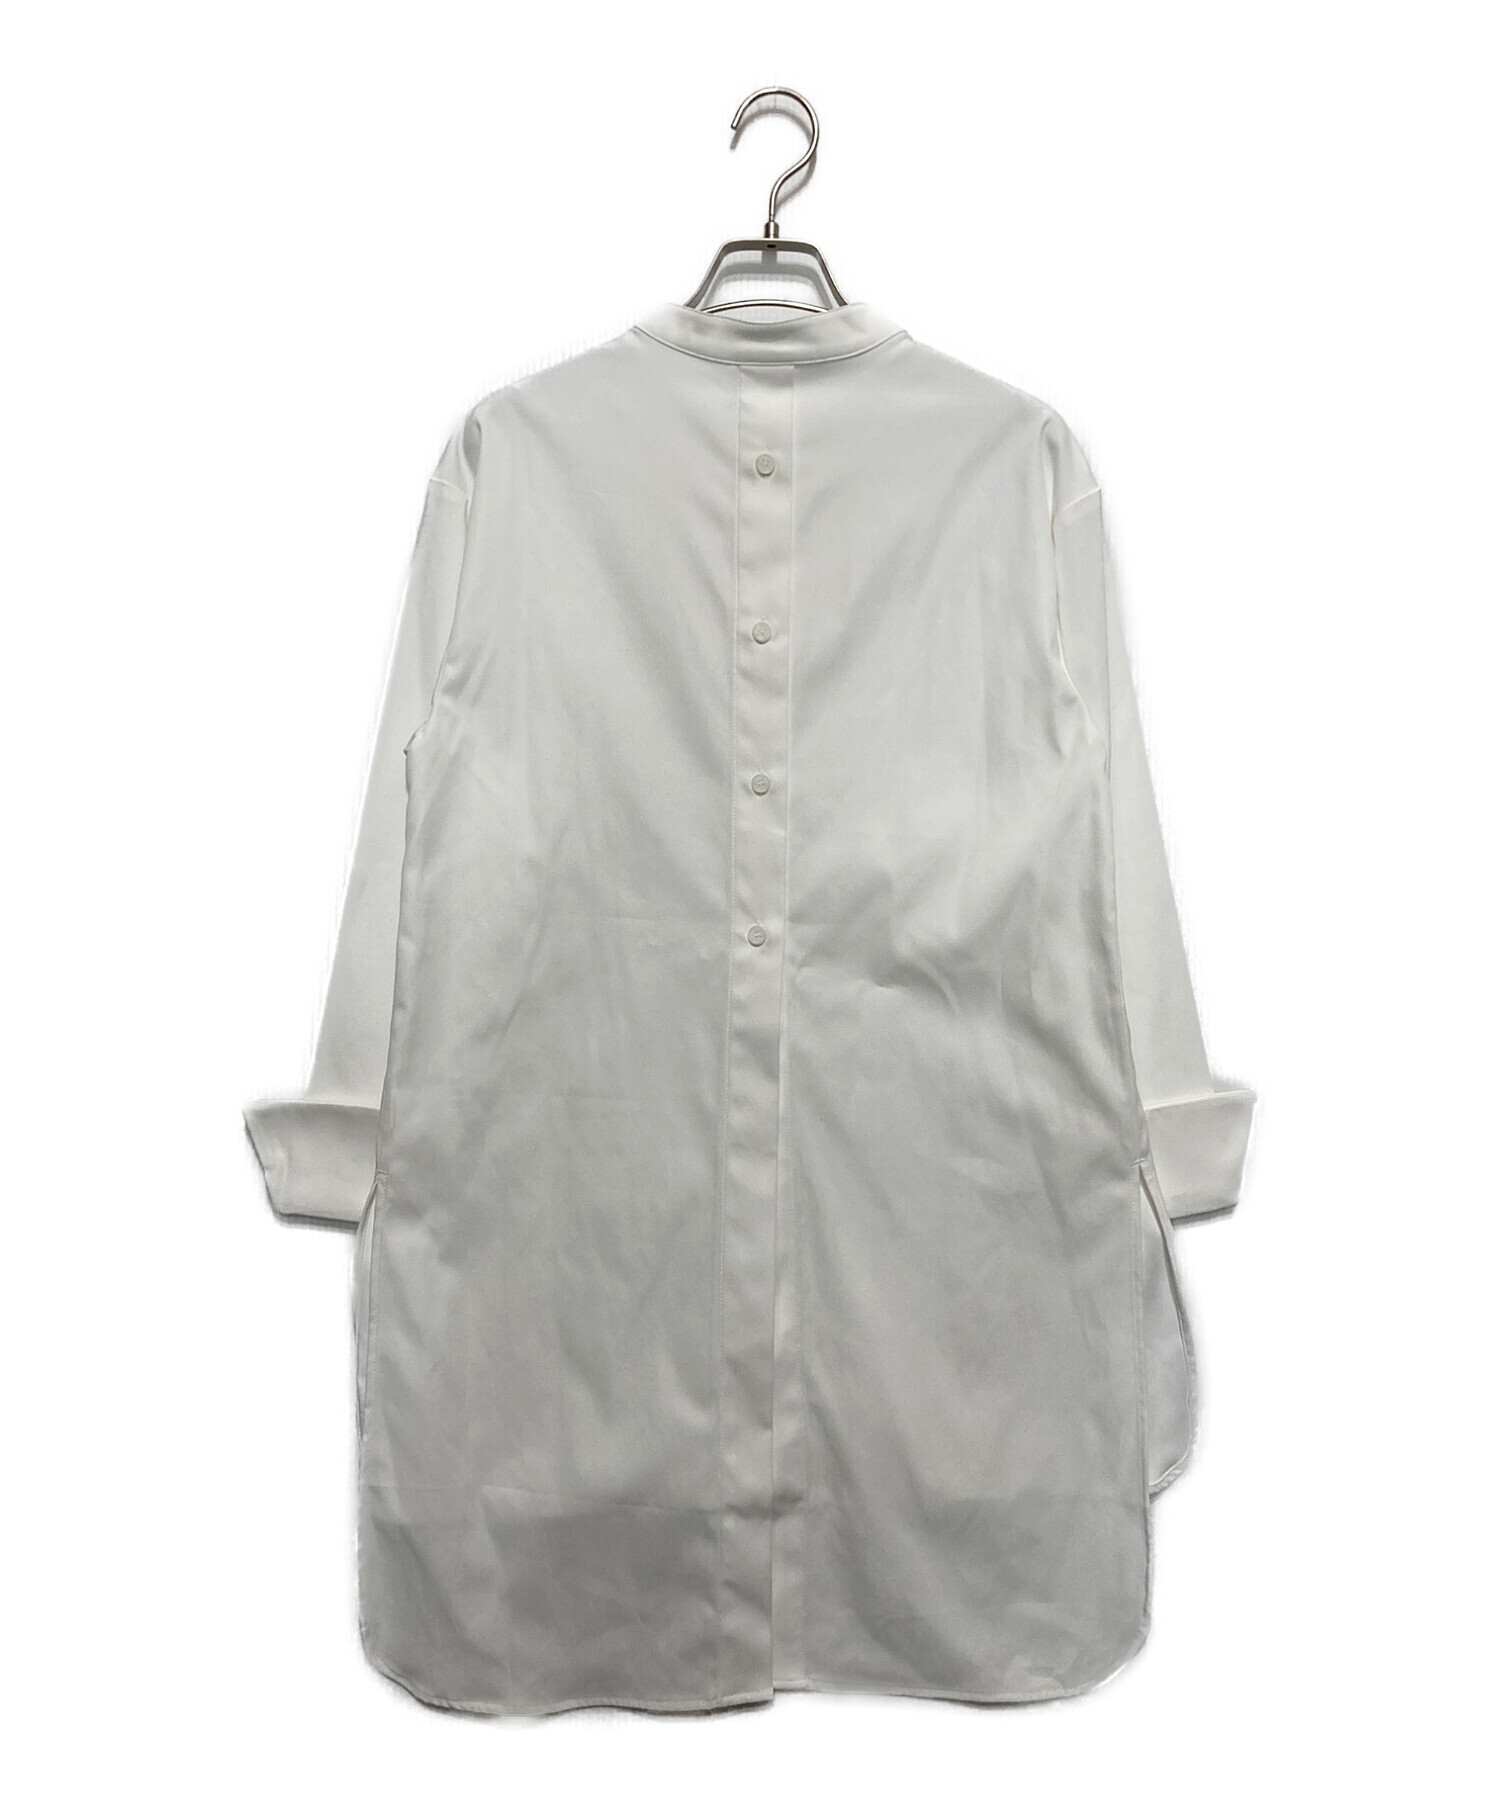 regleam (リグリーム) ロングシャツ ホワイト サイズ:Free